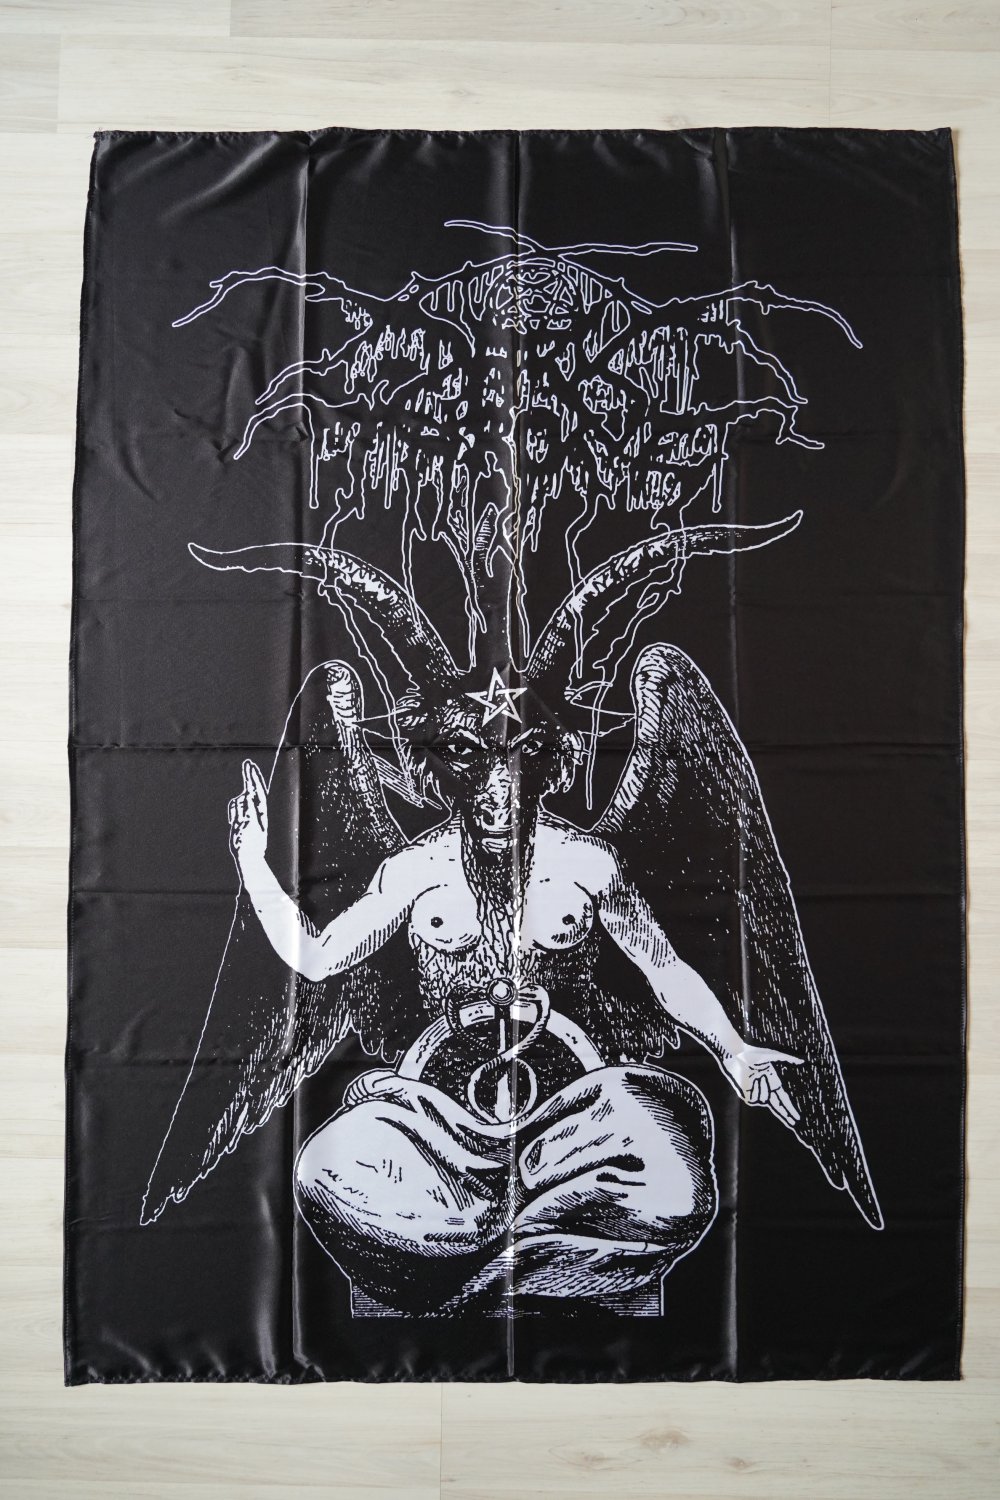 DARKTHRONE - Baphomet FLAG Black metal cloth poster banner Burzum Fenriz